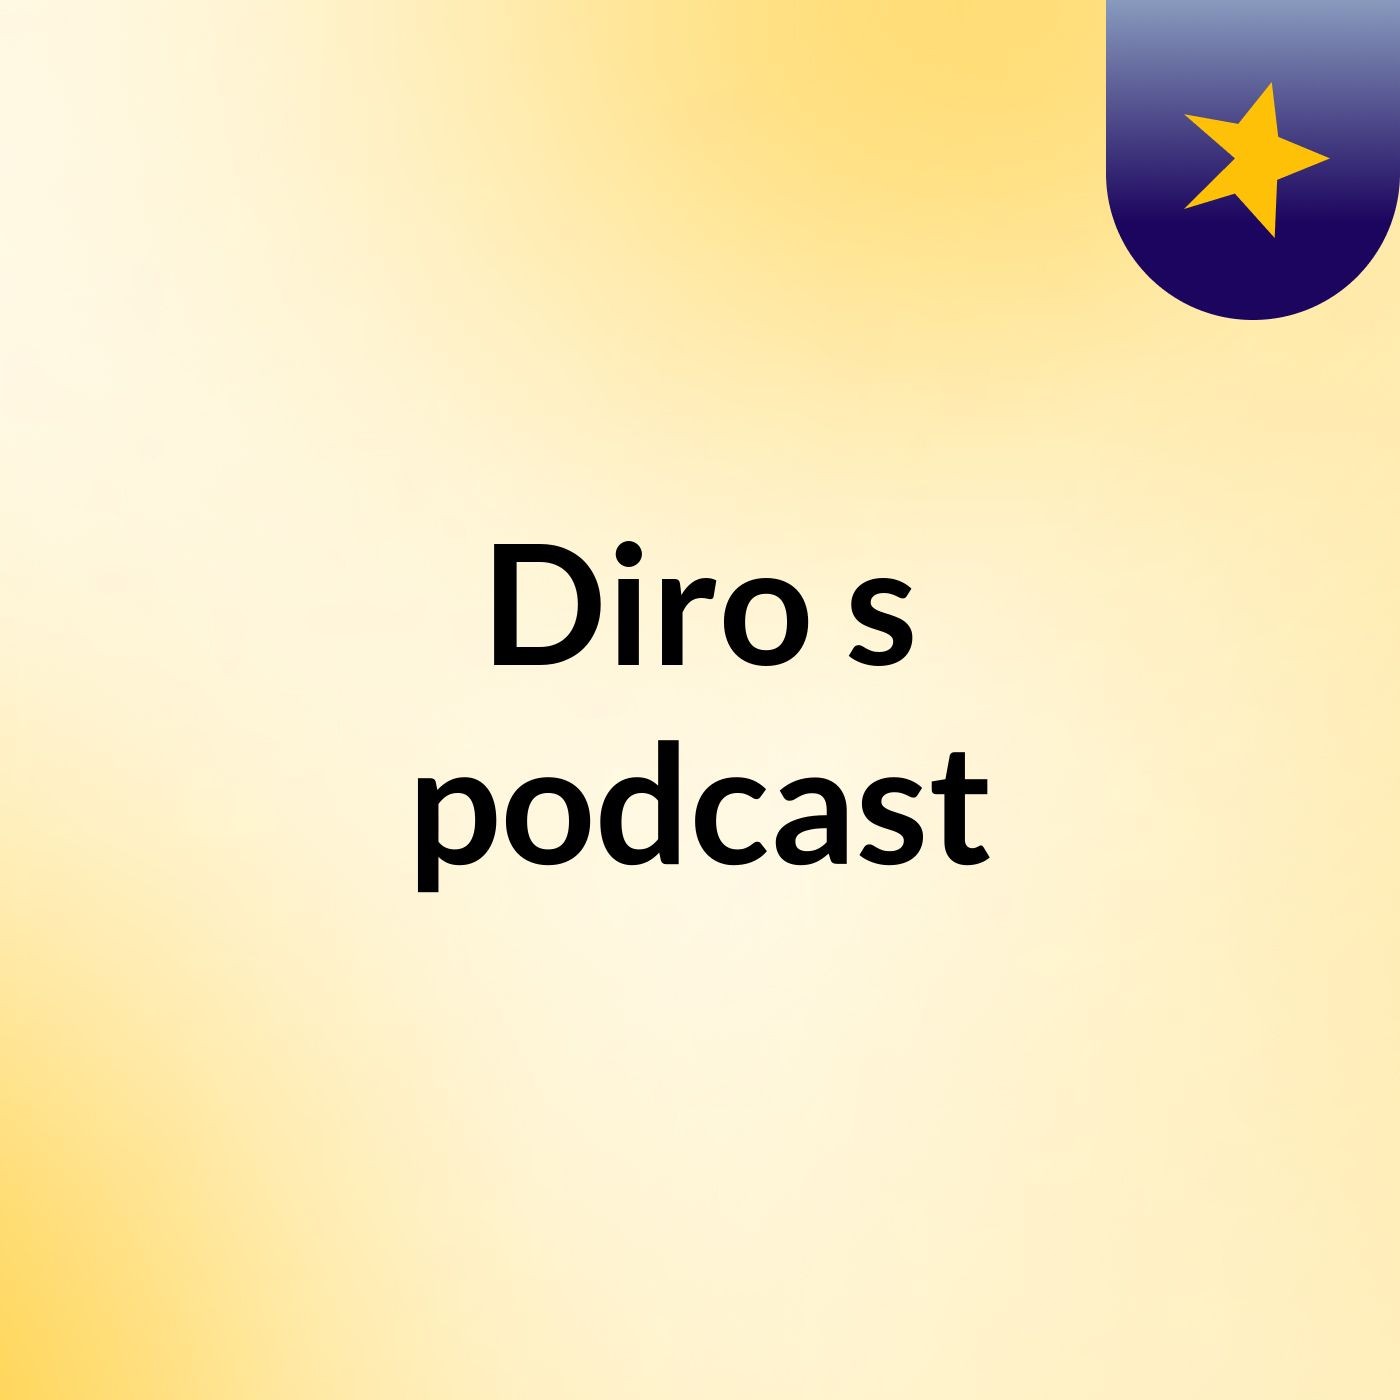 Diro's podcast